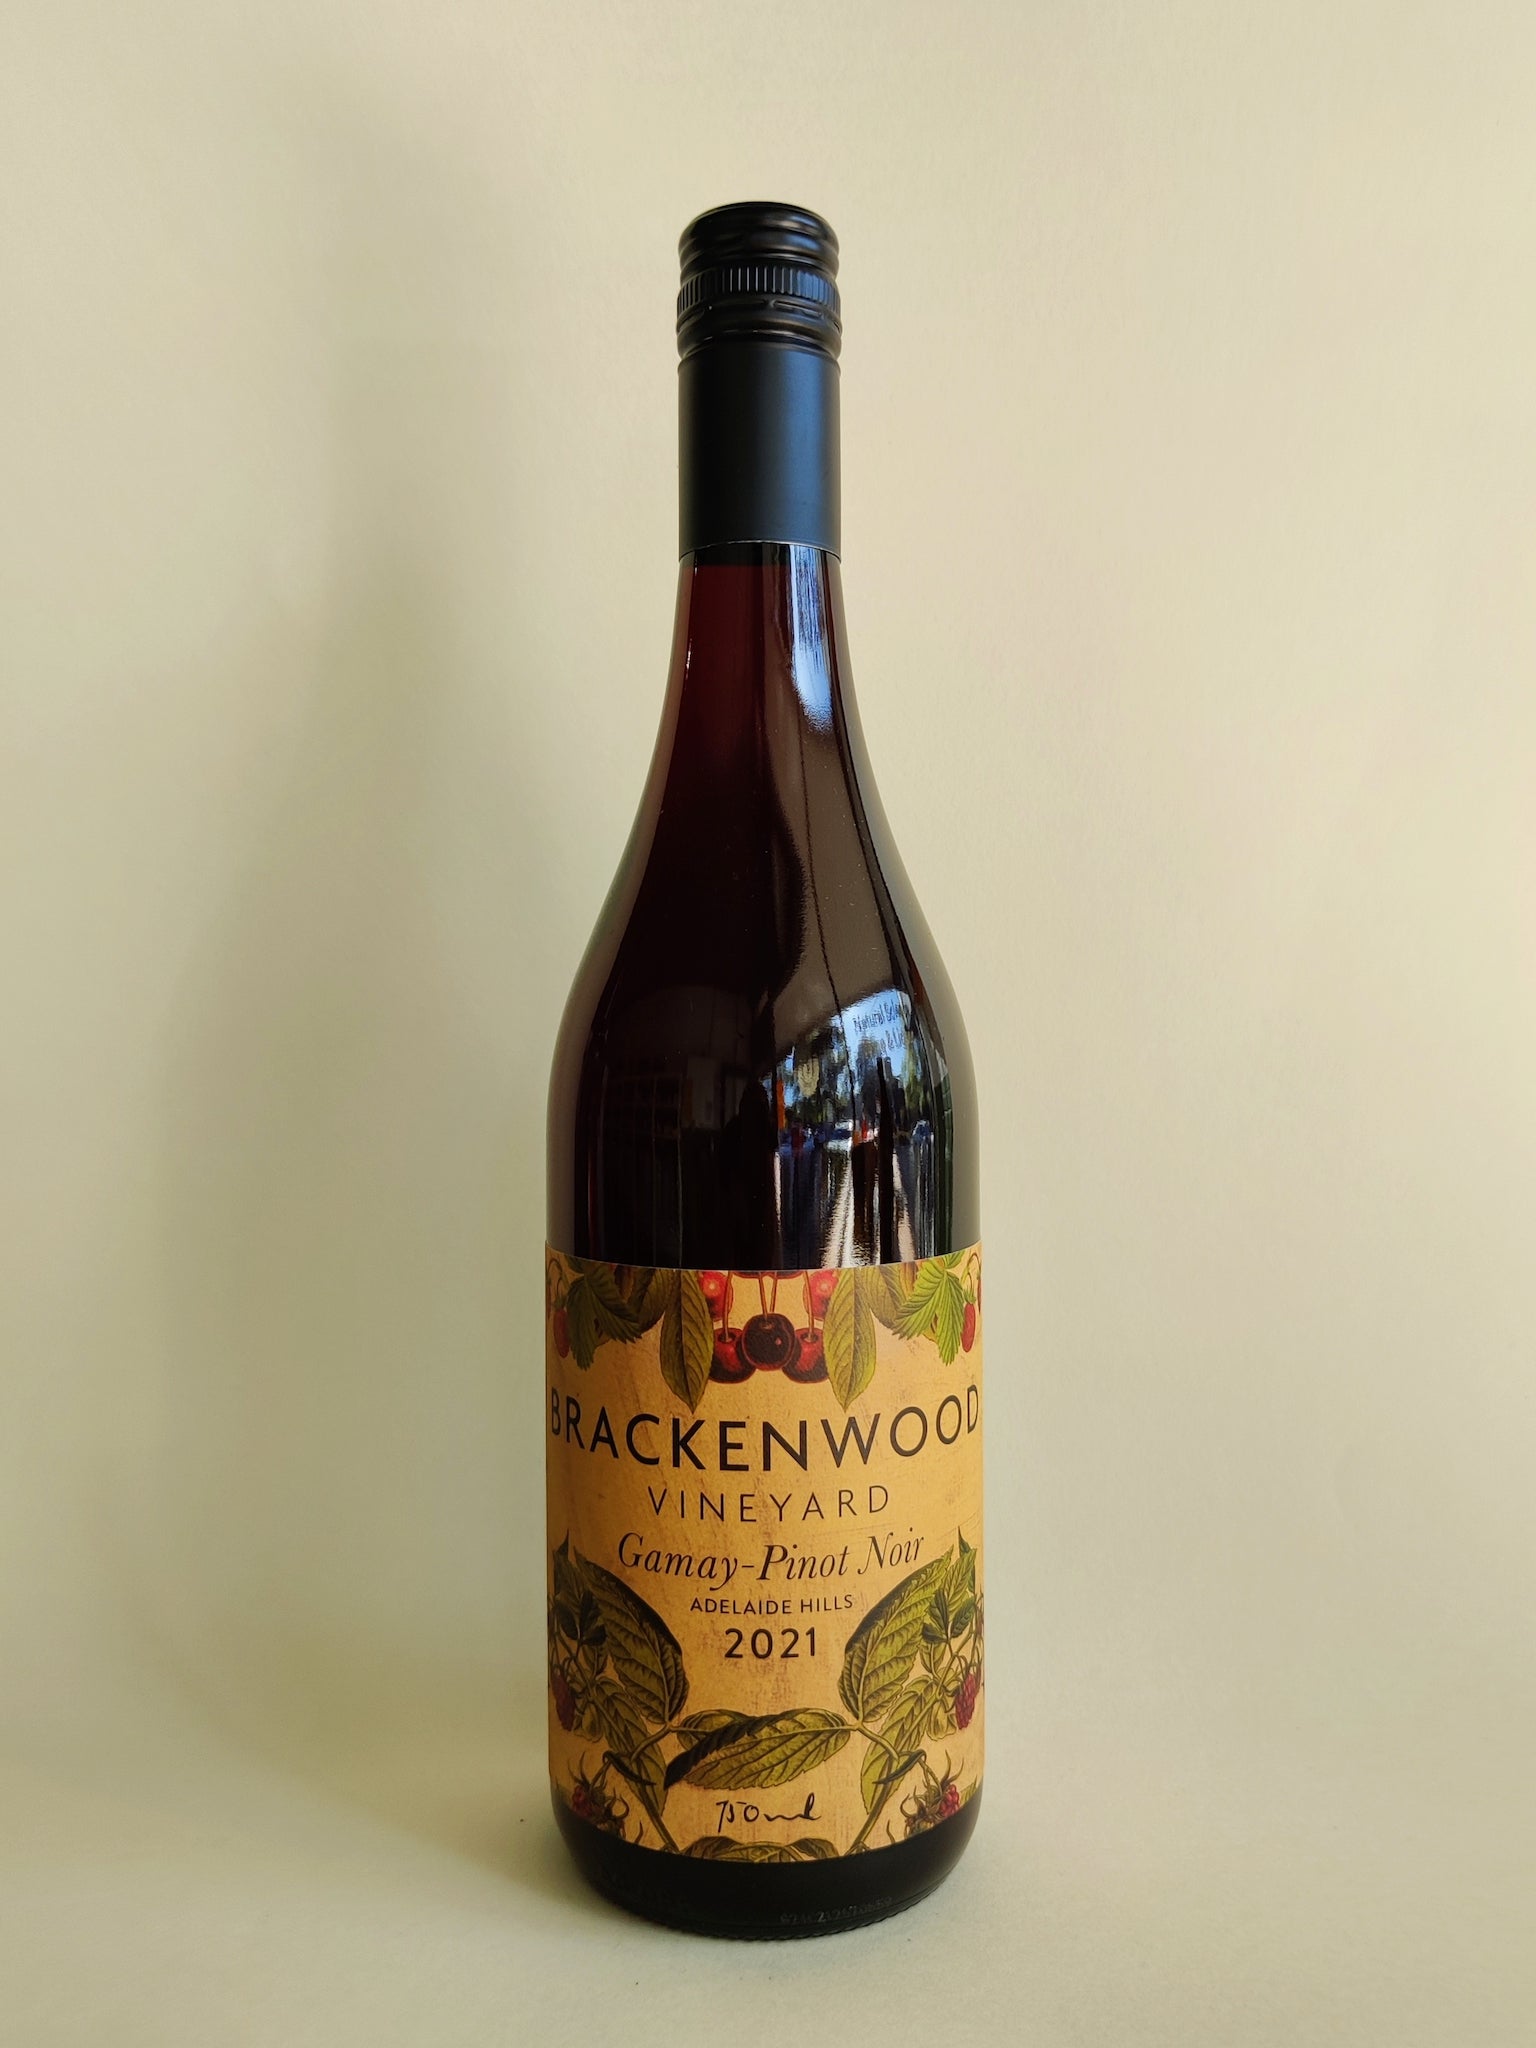 A bottle of Brackenwood Pinot Noir/Gamay from the Adelaide Hills, South Australia. Biodynamic. 